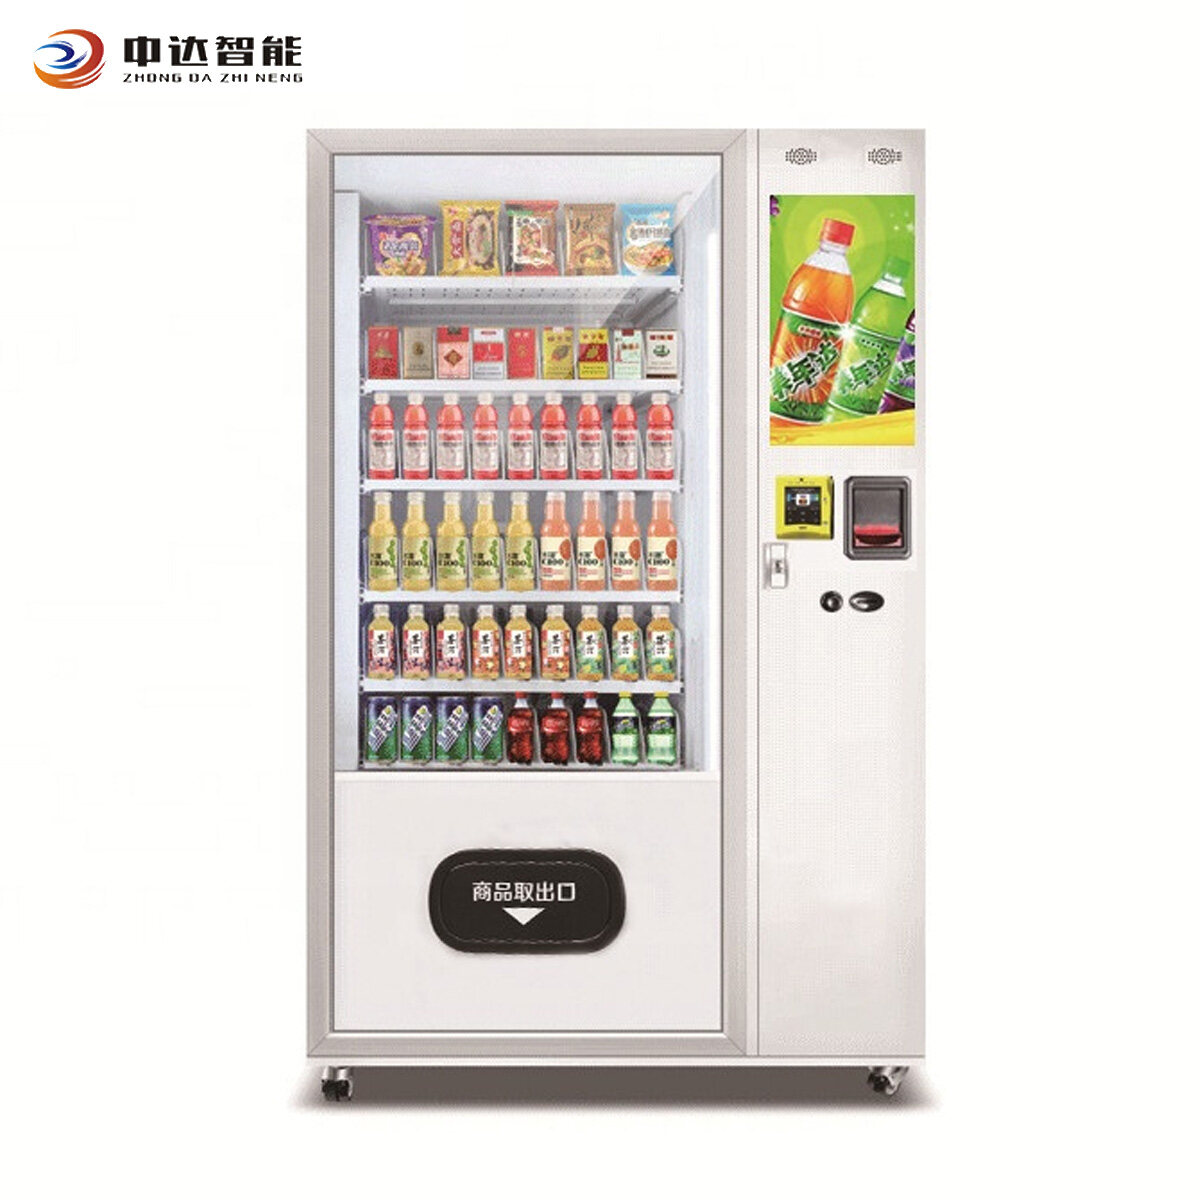 cold drink vending machine electronic vending machine